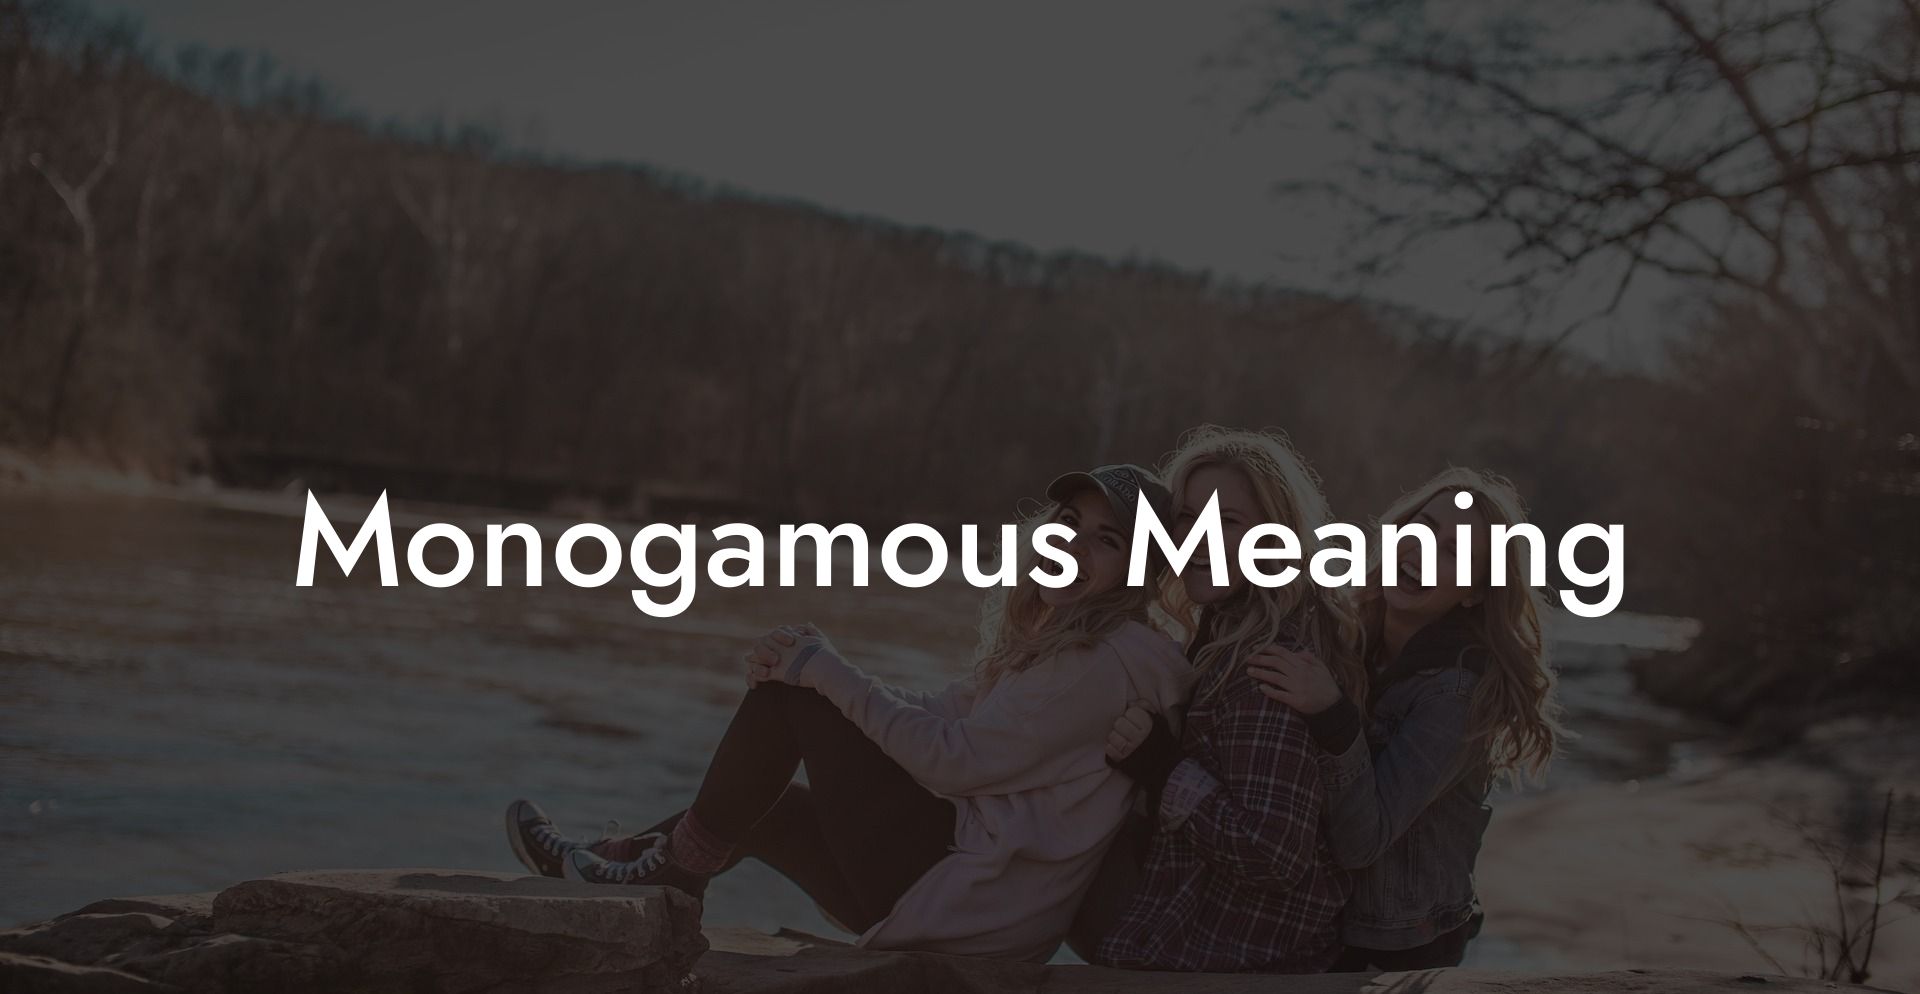 Monogamous Meaning